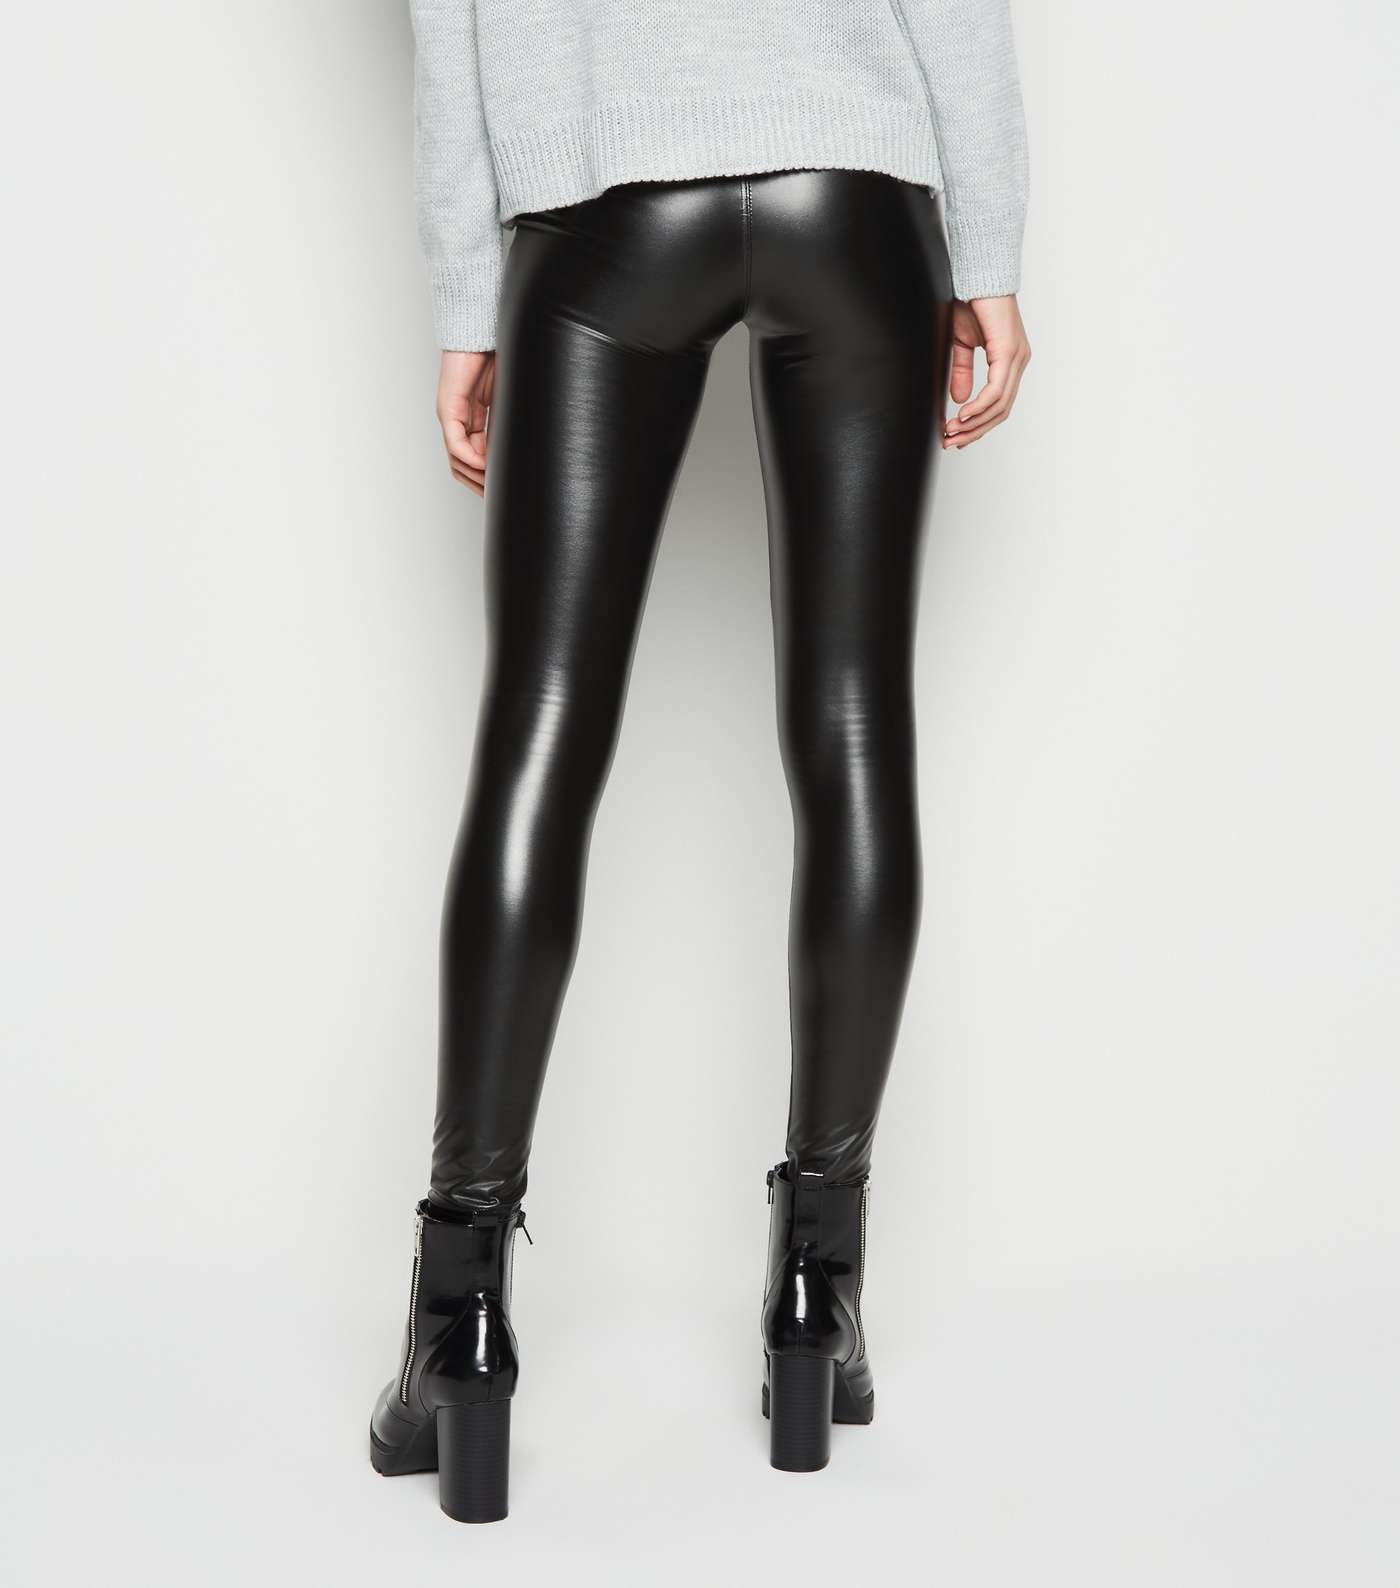 Cameo Rose Black Leather-Look Leggings Image 3